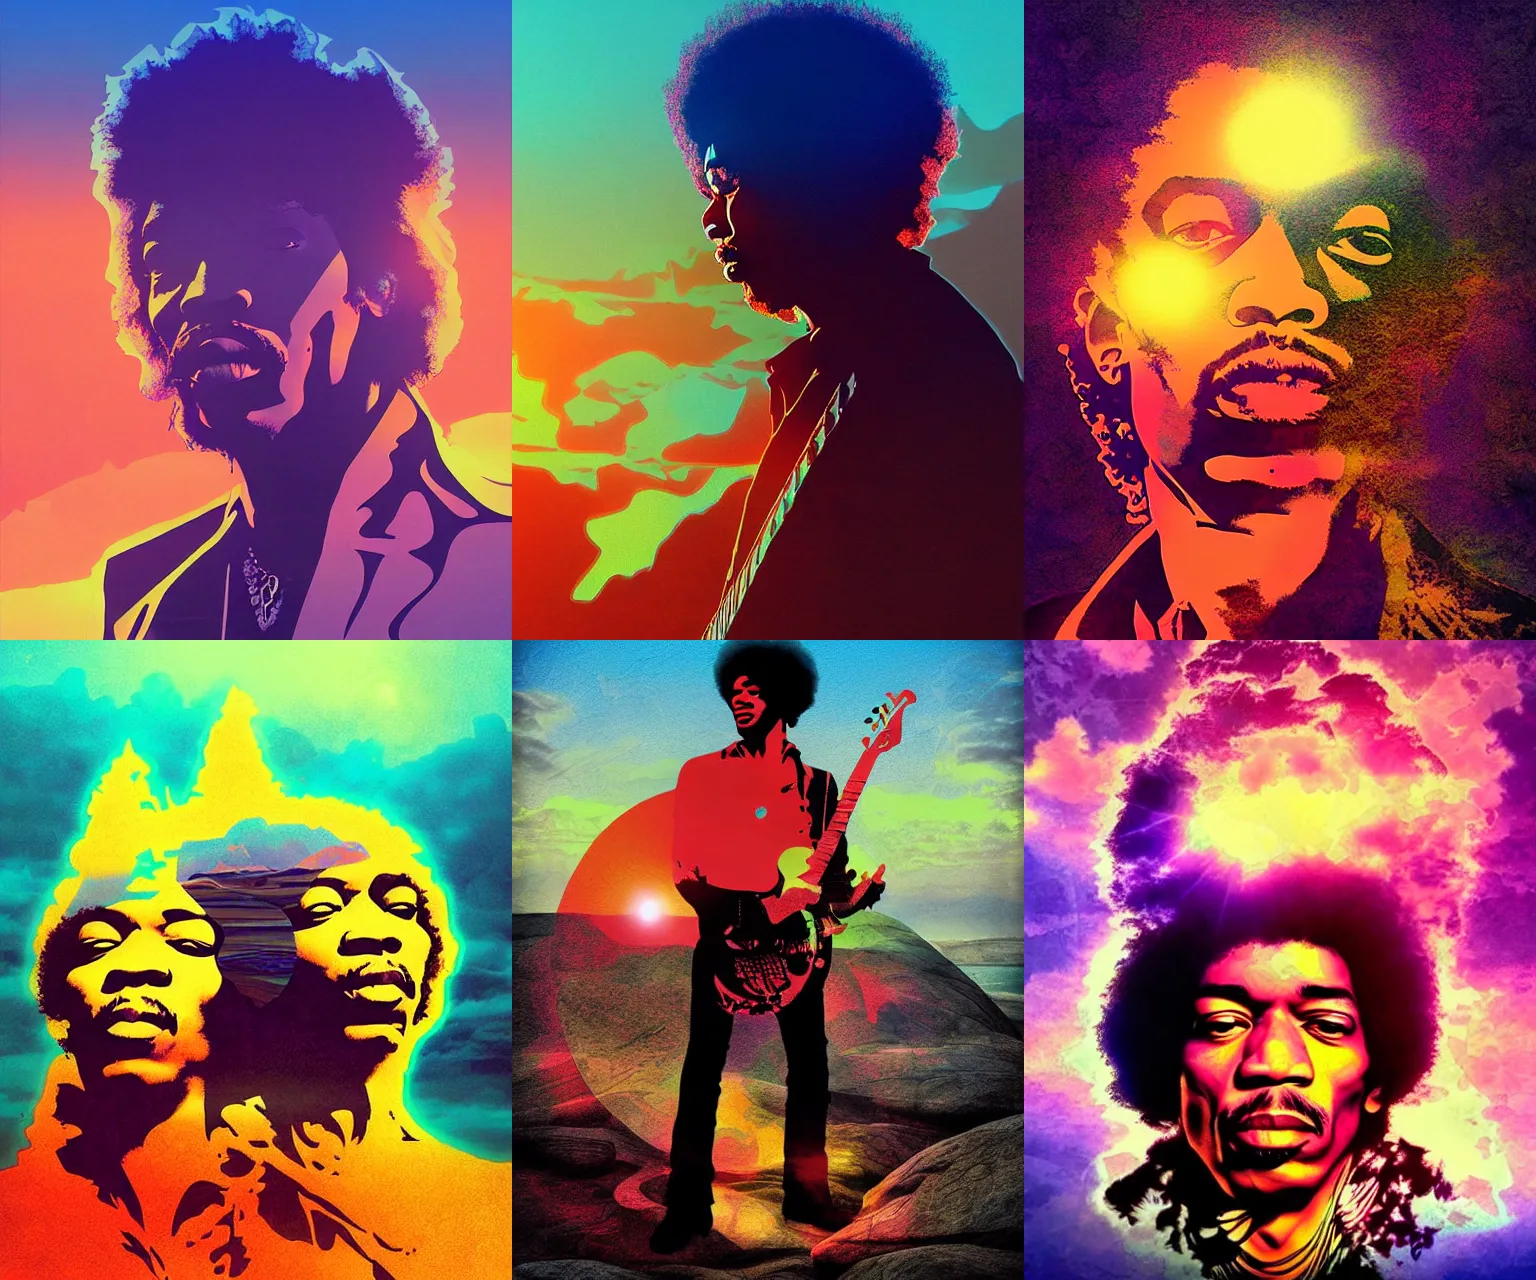 Prompt: Jimi Hendrix experimental double exposure stylized stone mountain sunrise, artgerm and ross tran, moebius, retro illustrated digital pop surrealism art